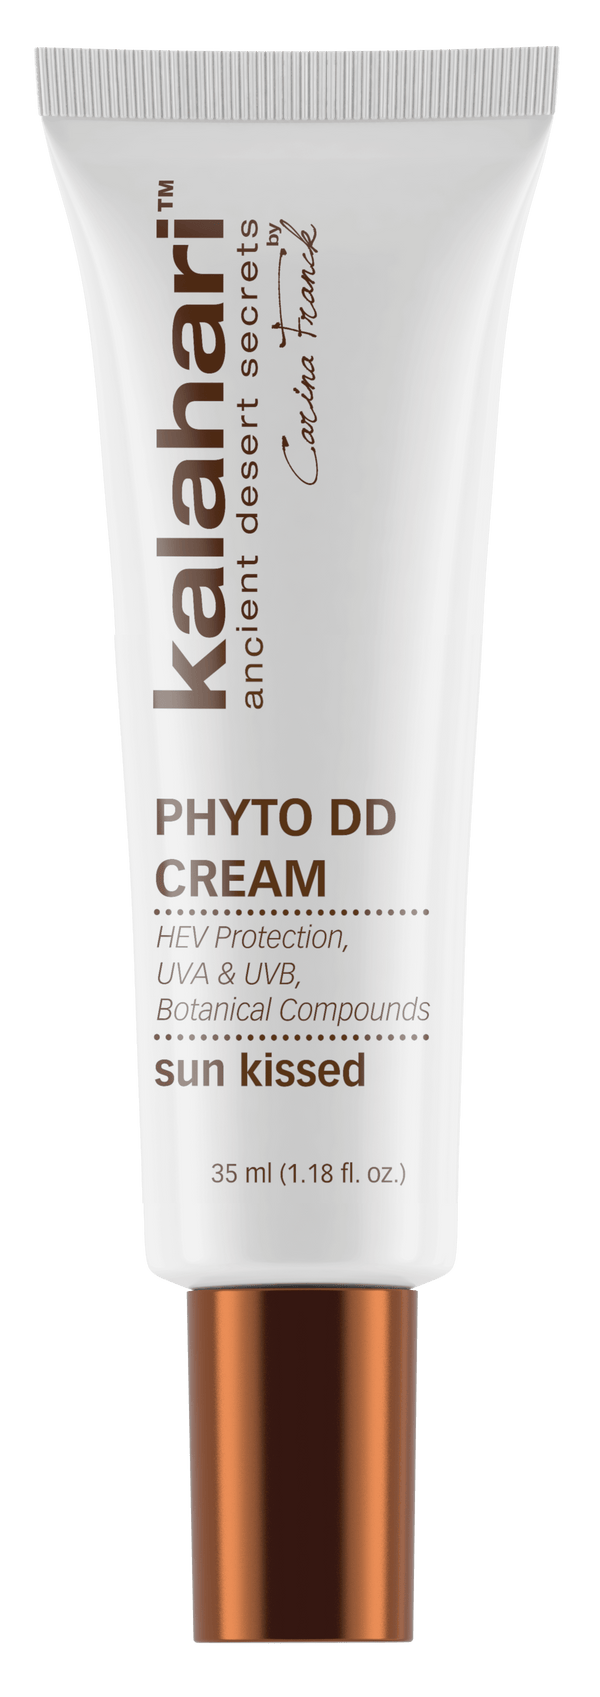 Phyto dd cream sun kissed